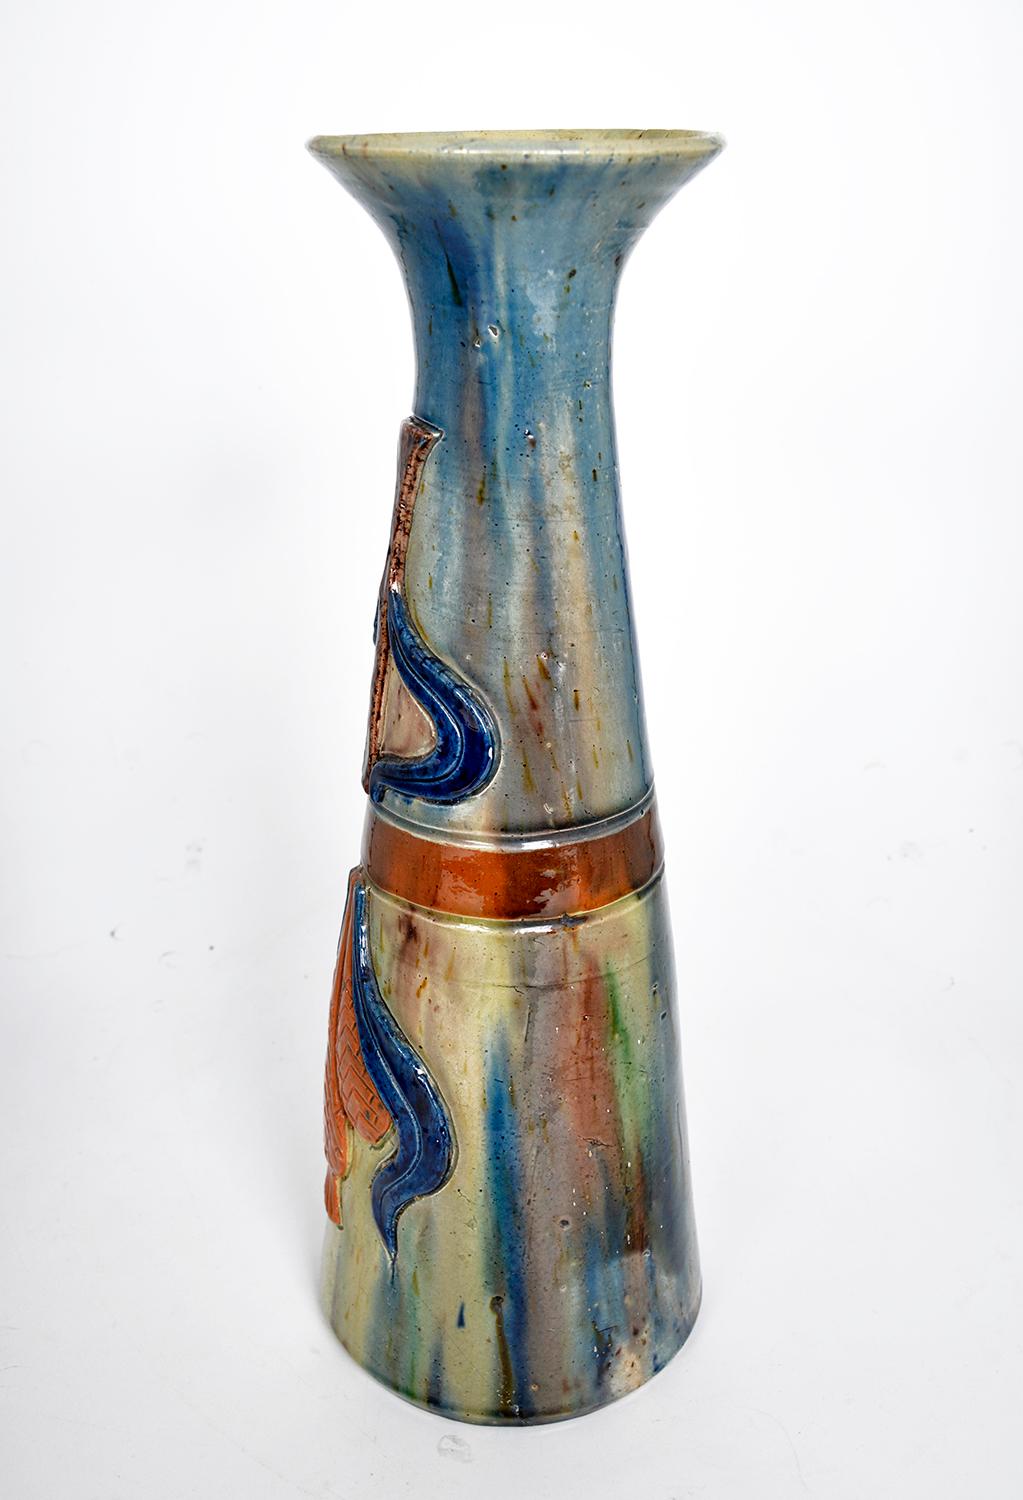 Belgian Flemish Studio Pottery Art Nouveau Drip Glazed Earthenware Vase 1900s Folk Art